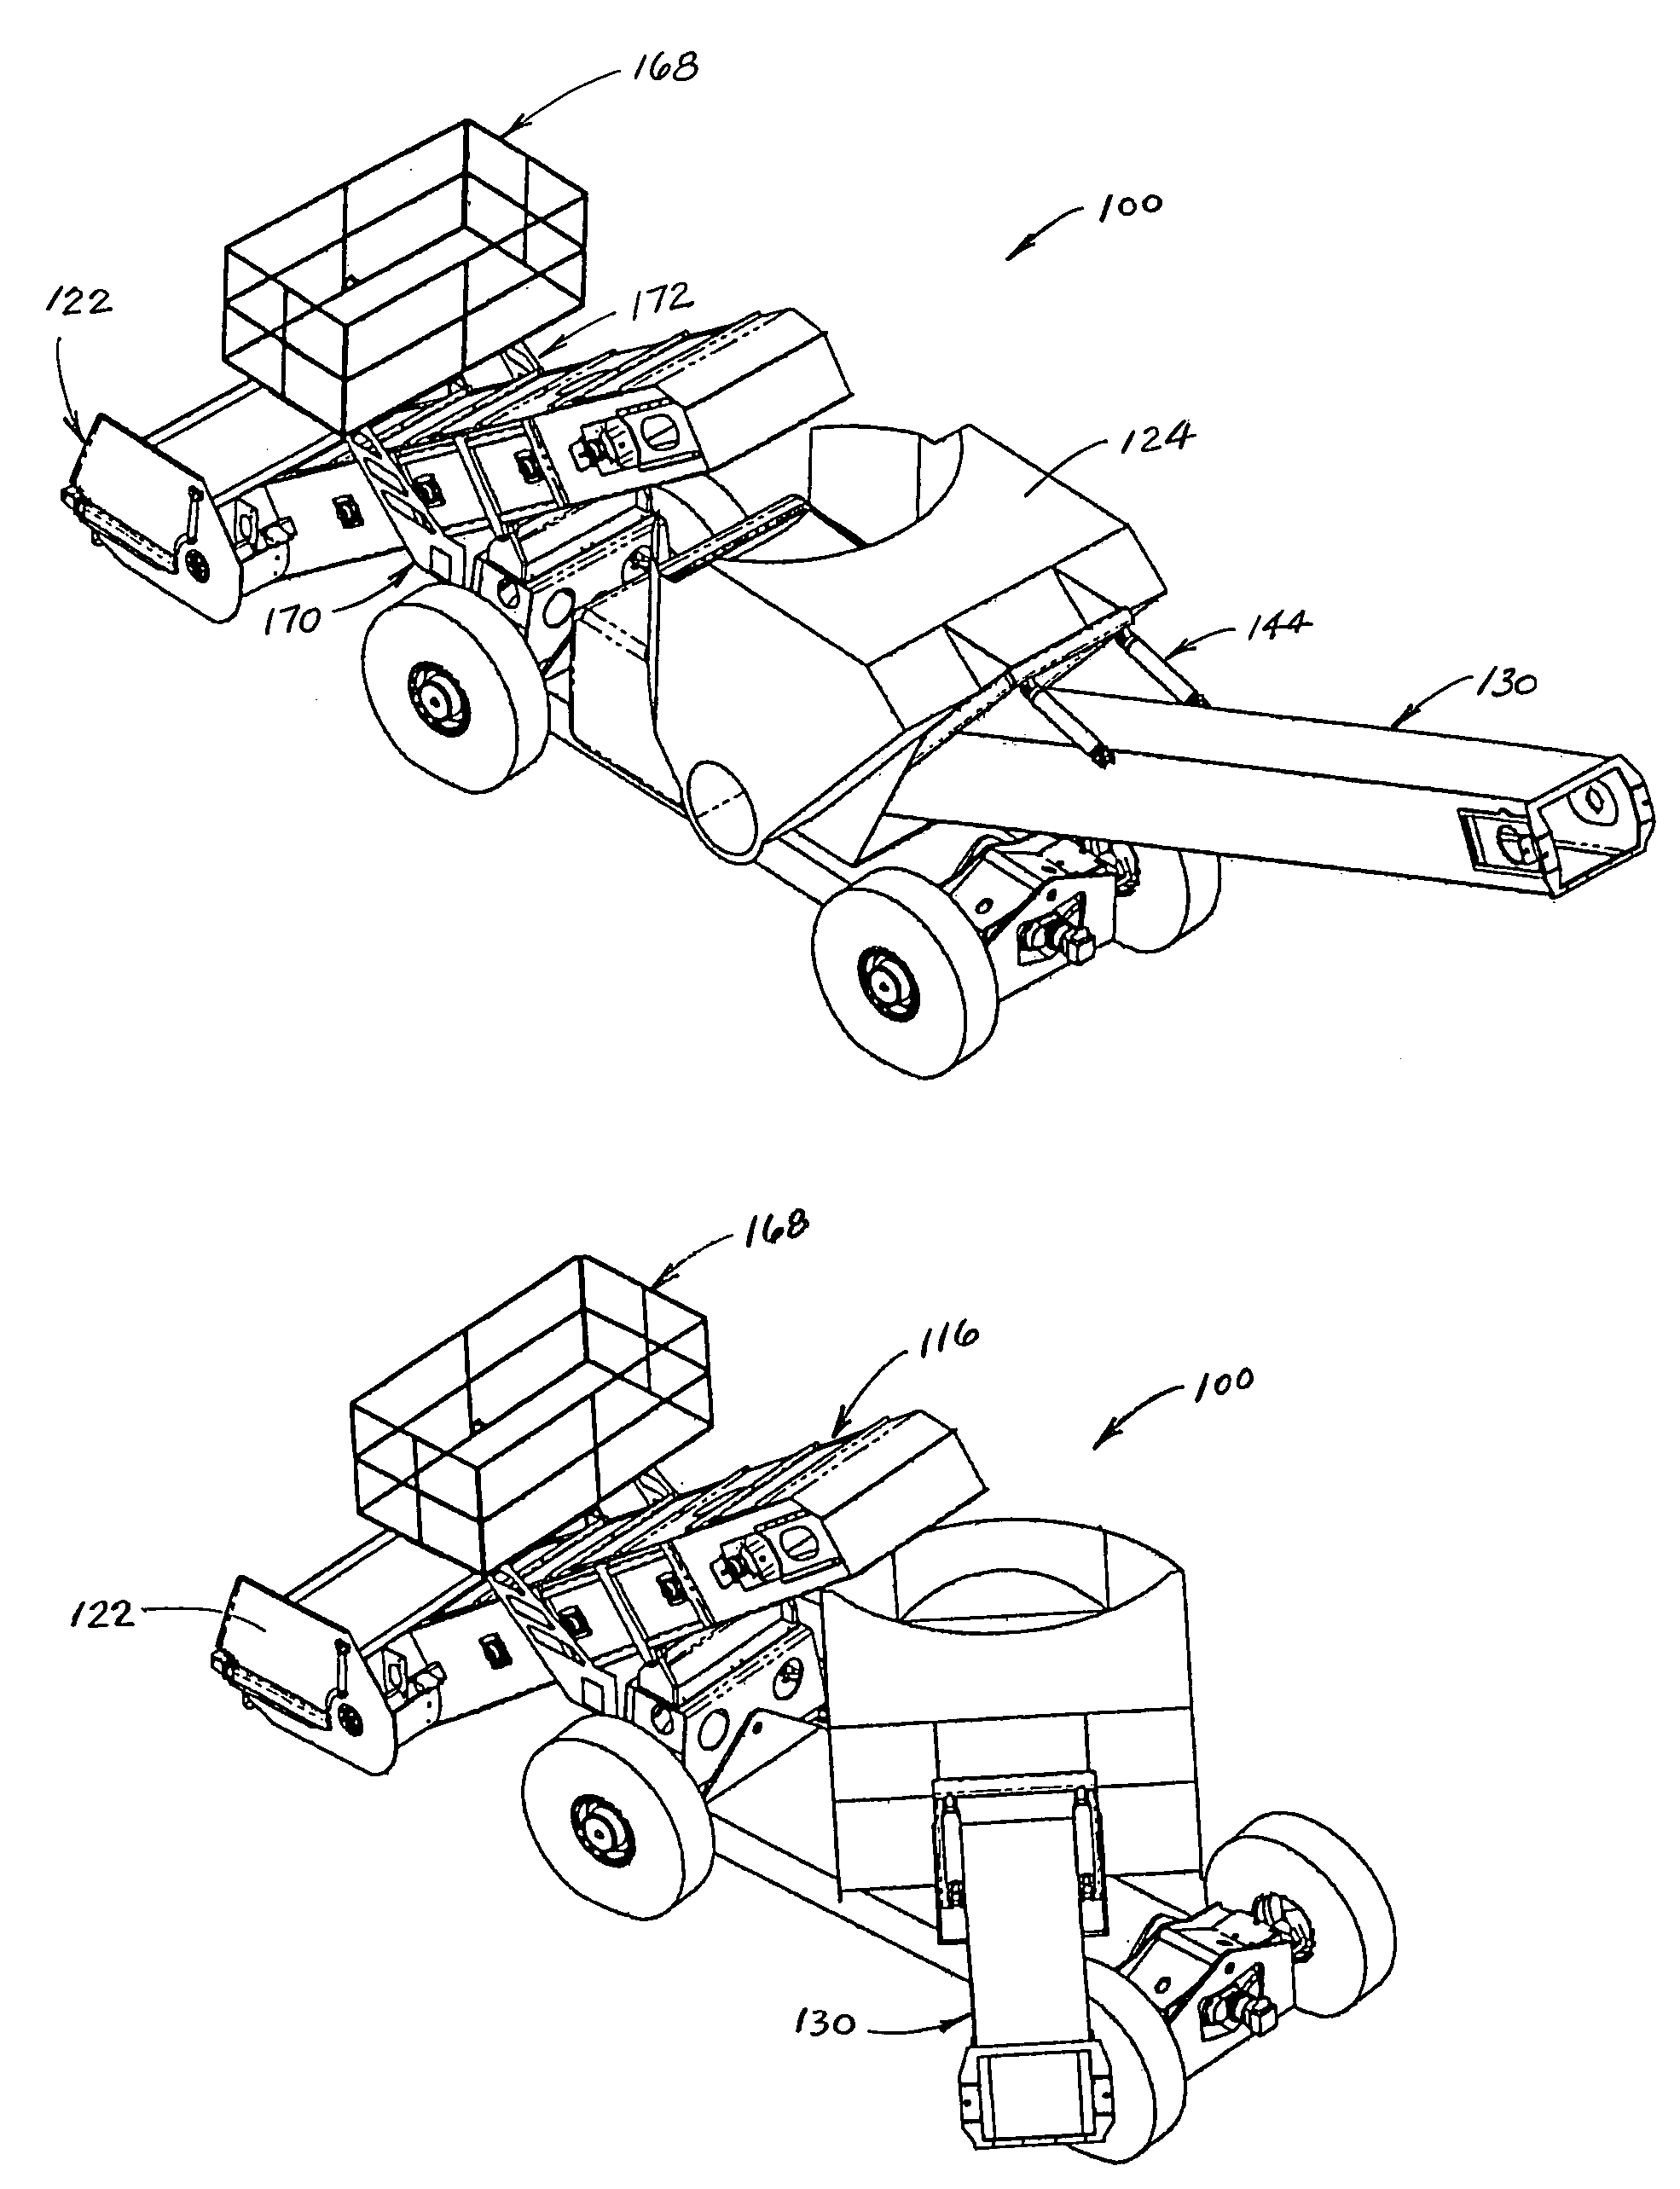 Material transfer vehicle for use in asphalt paving